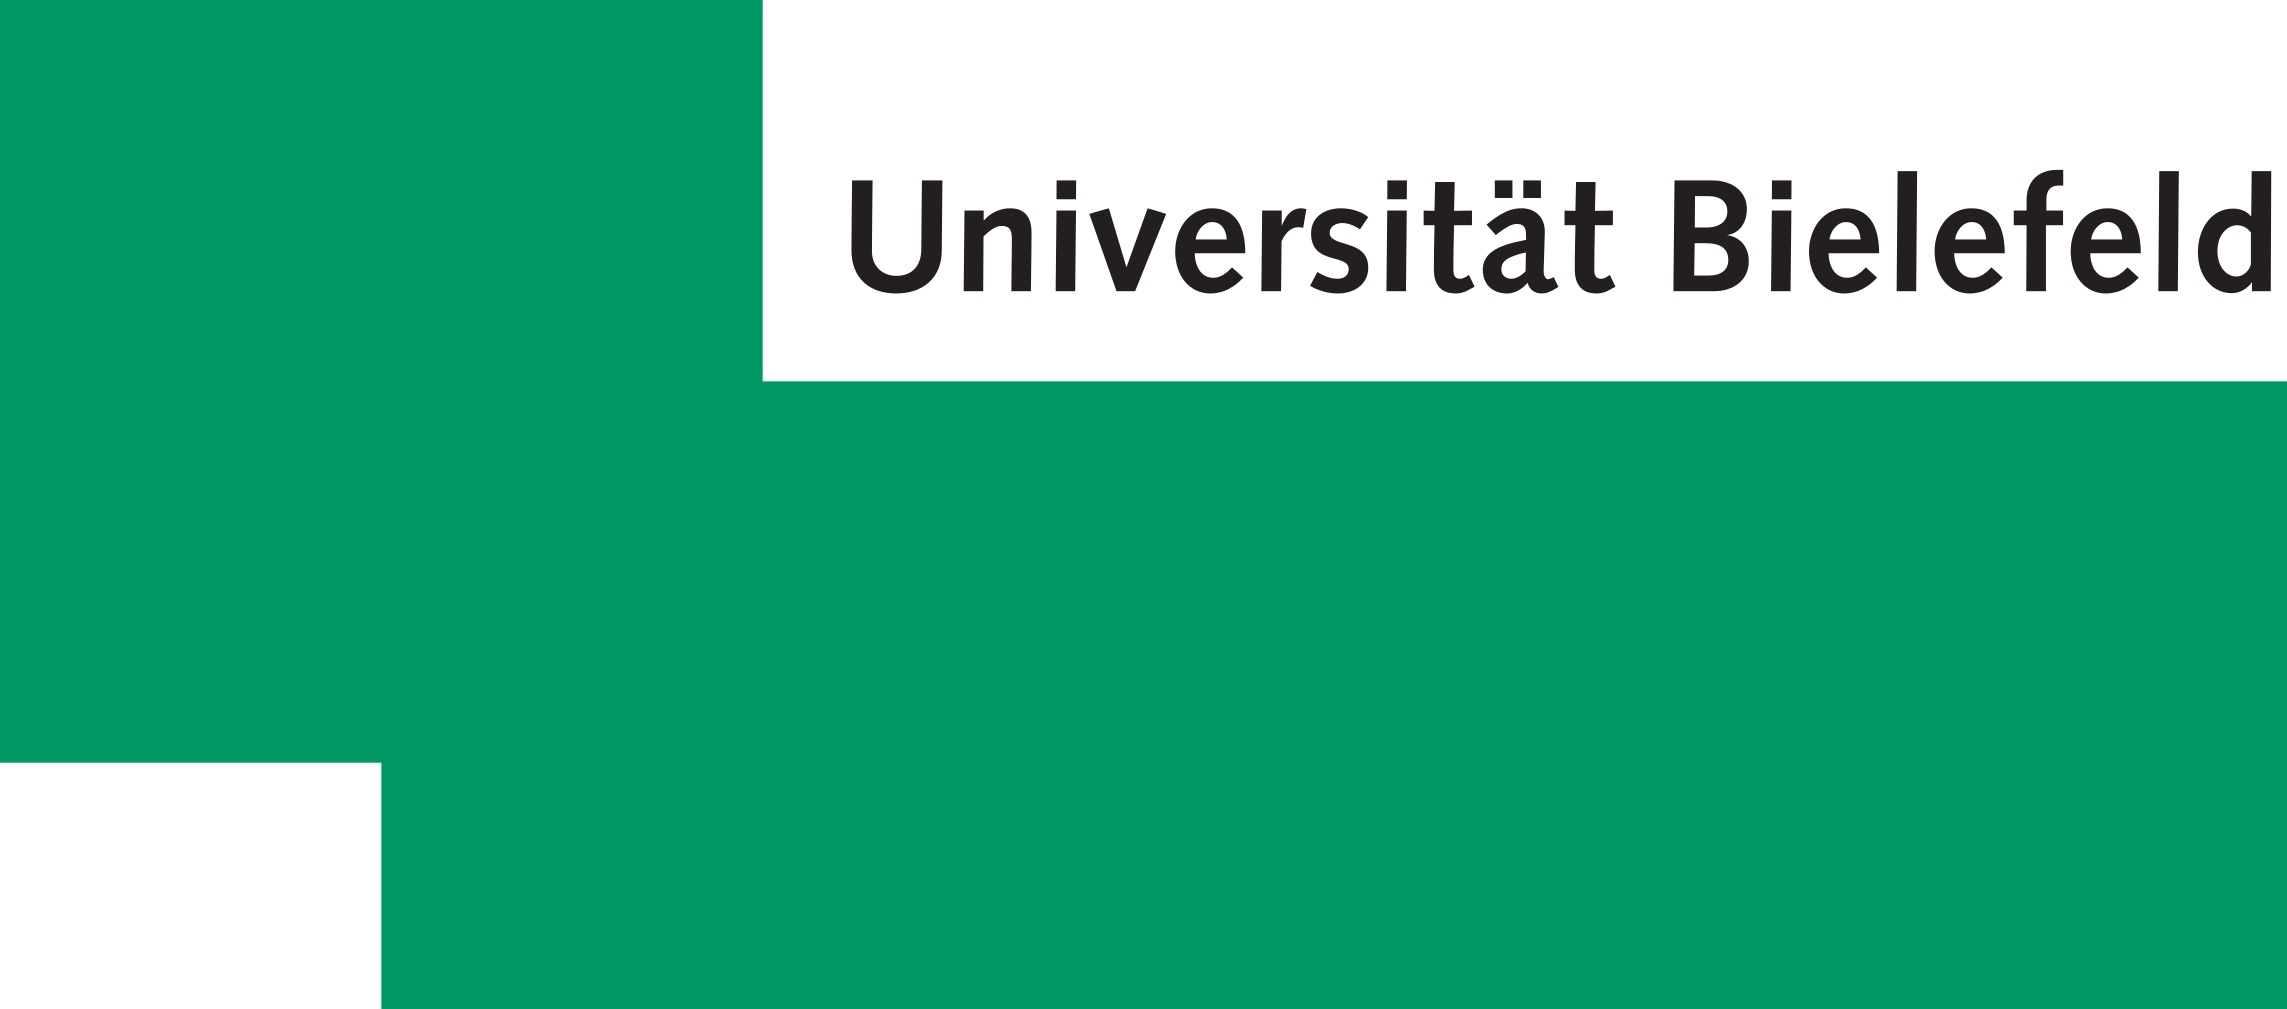 Universitat Bielefeld